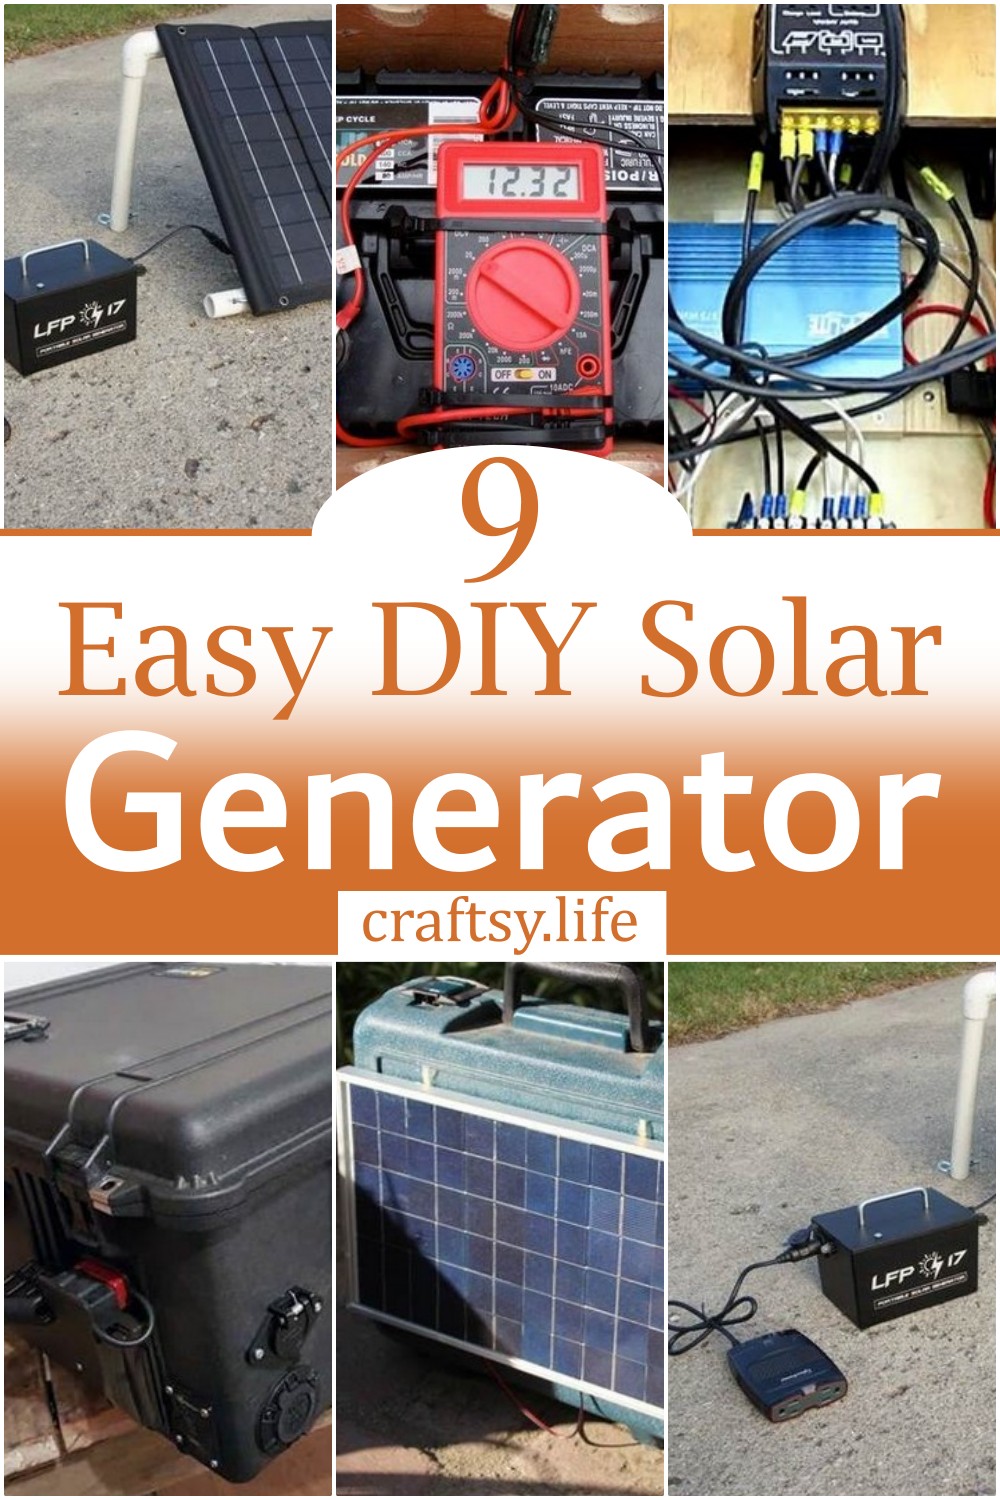 Easy DIY Solar Generator